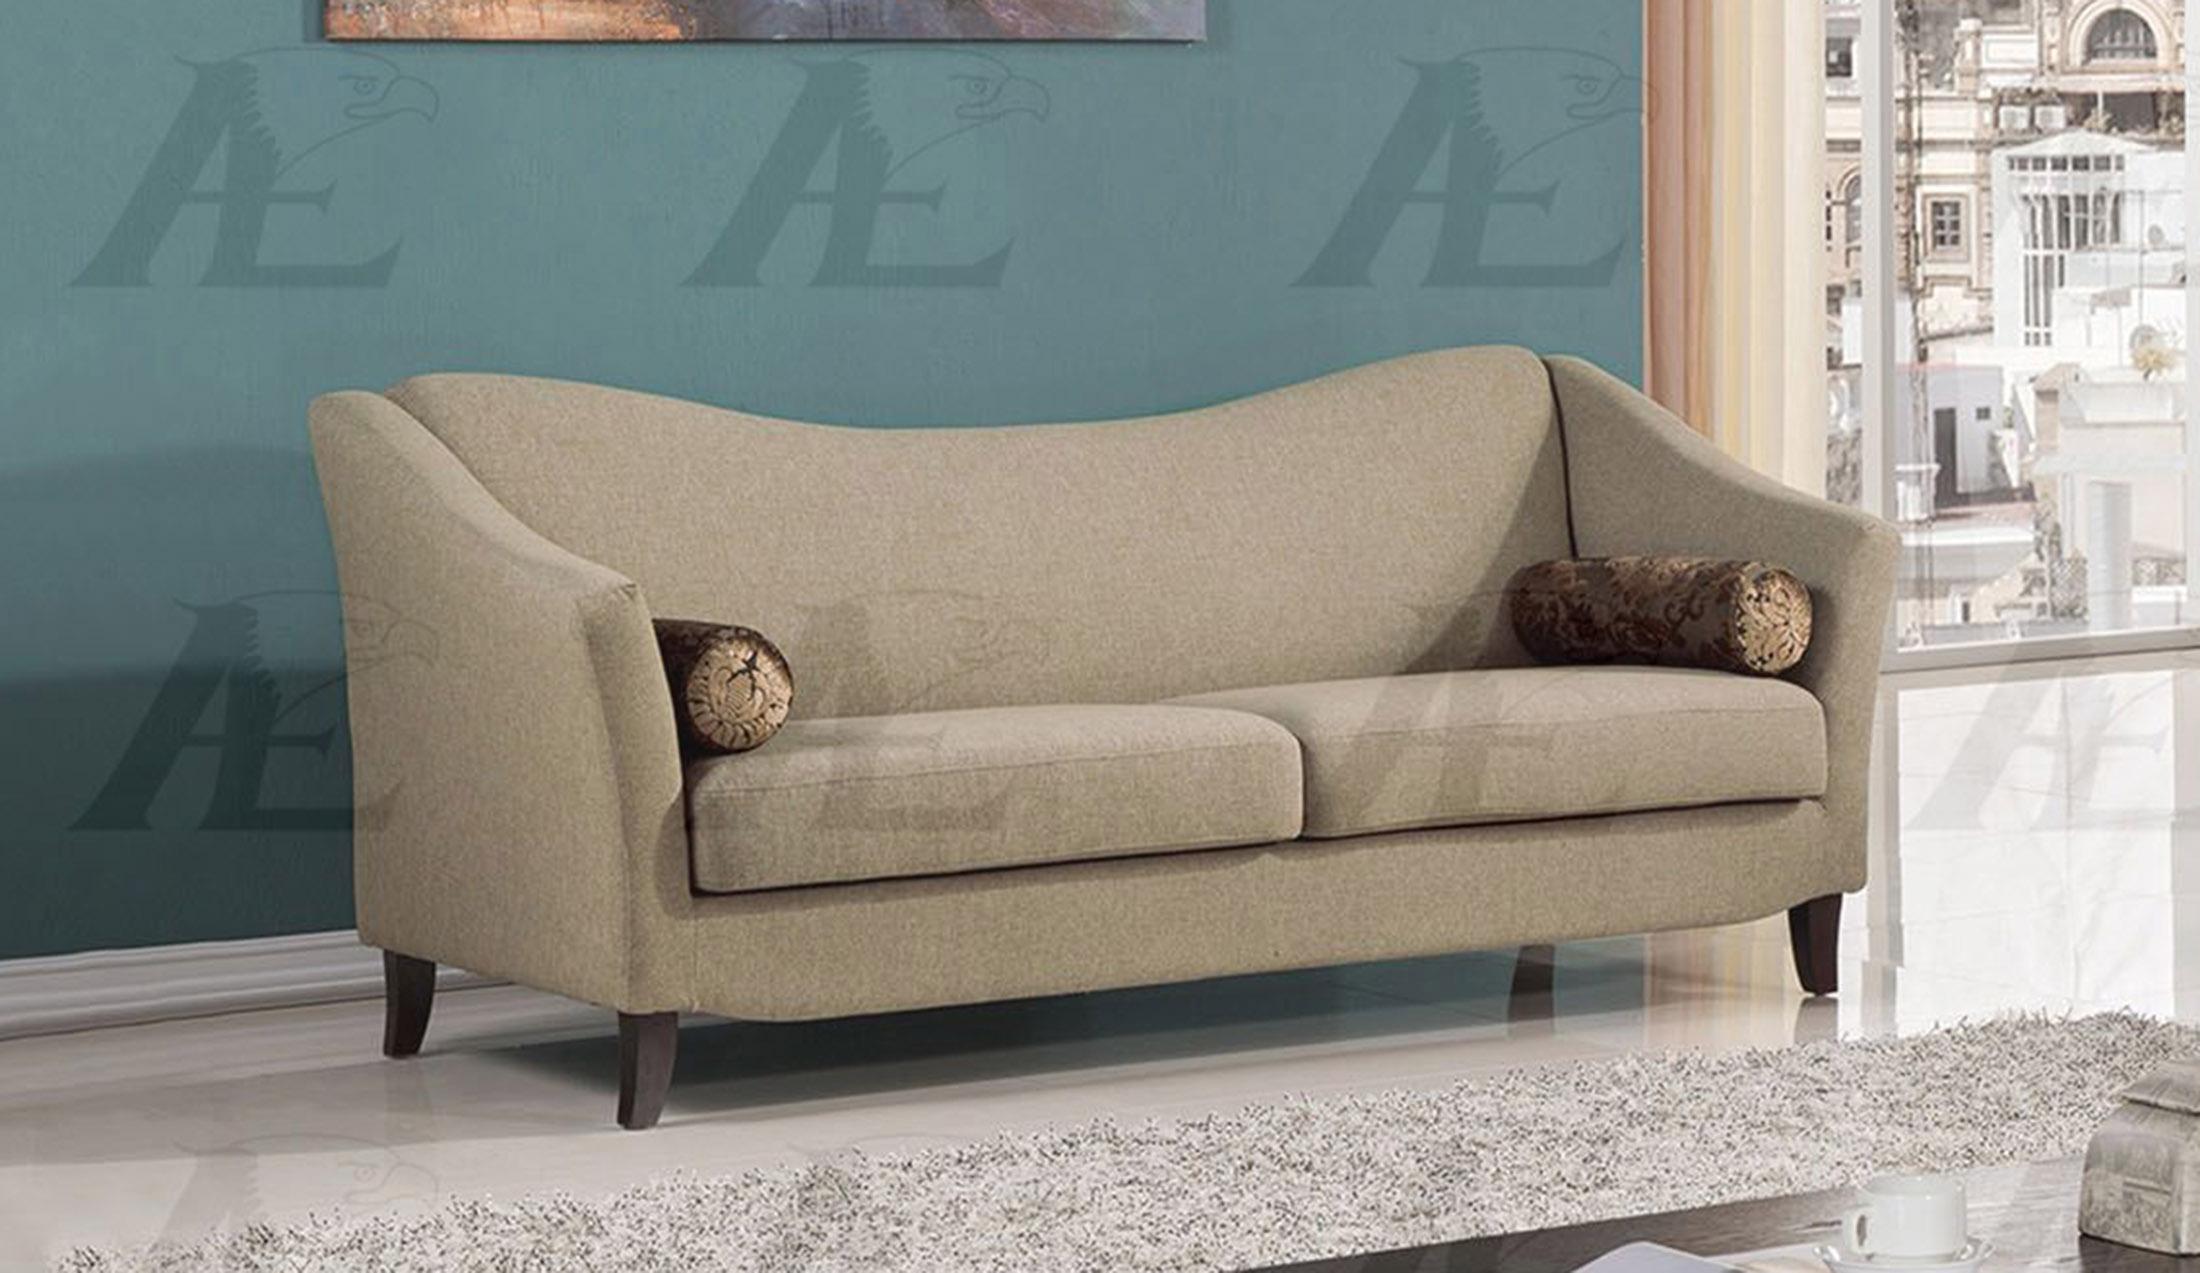 

    
American Eagle Furniture AE2371 Sofa Tan AE2371
